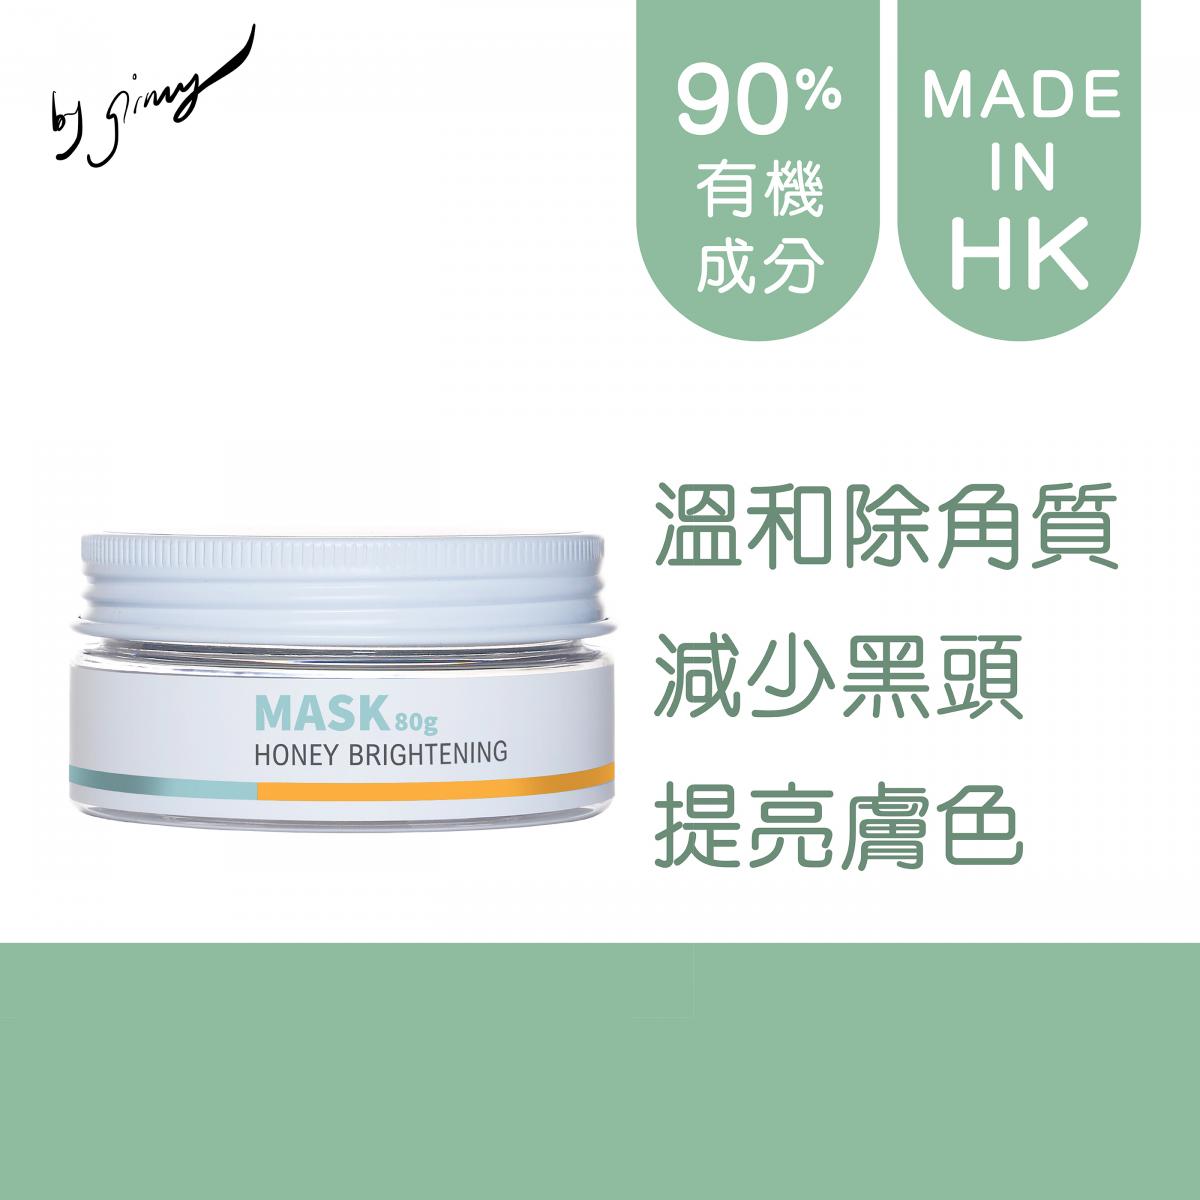 Honey britening scrub mask  (Made in HK | No parabens | Normal shelf life:4-6 mths)